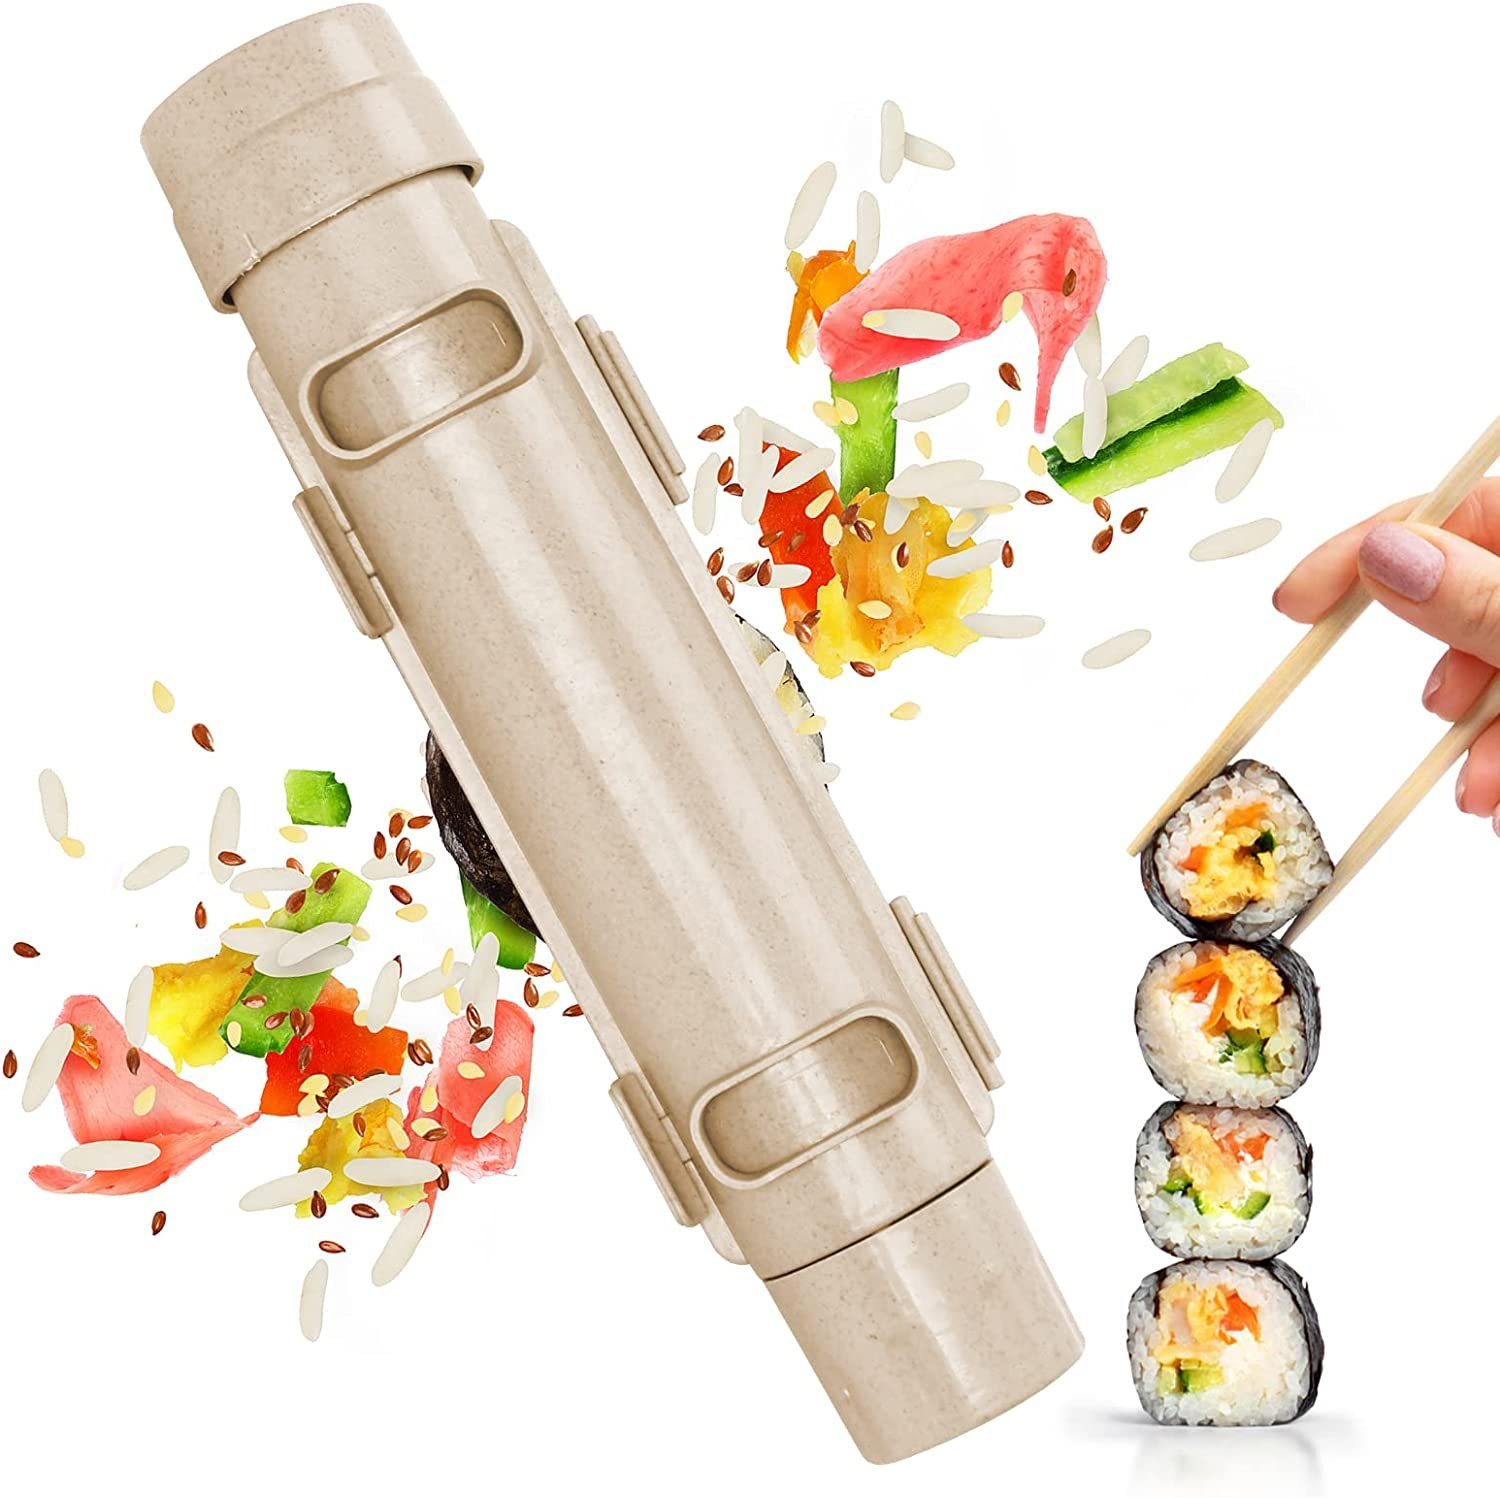 gemeinsame Sushi-DIY-Maschine, Beige NUODWELL Zubereitungswerkzeuge Sushiteller Sushi-Bazooka,